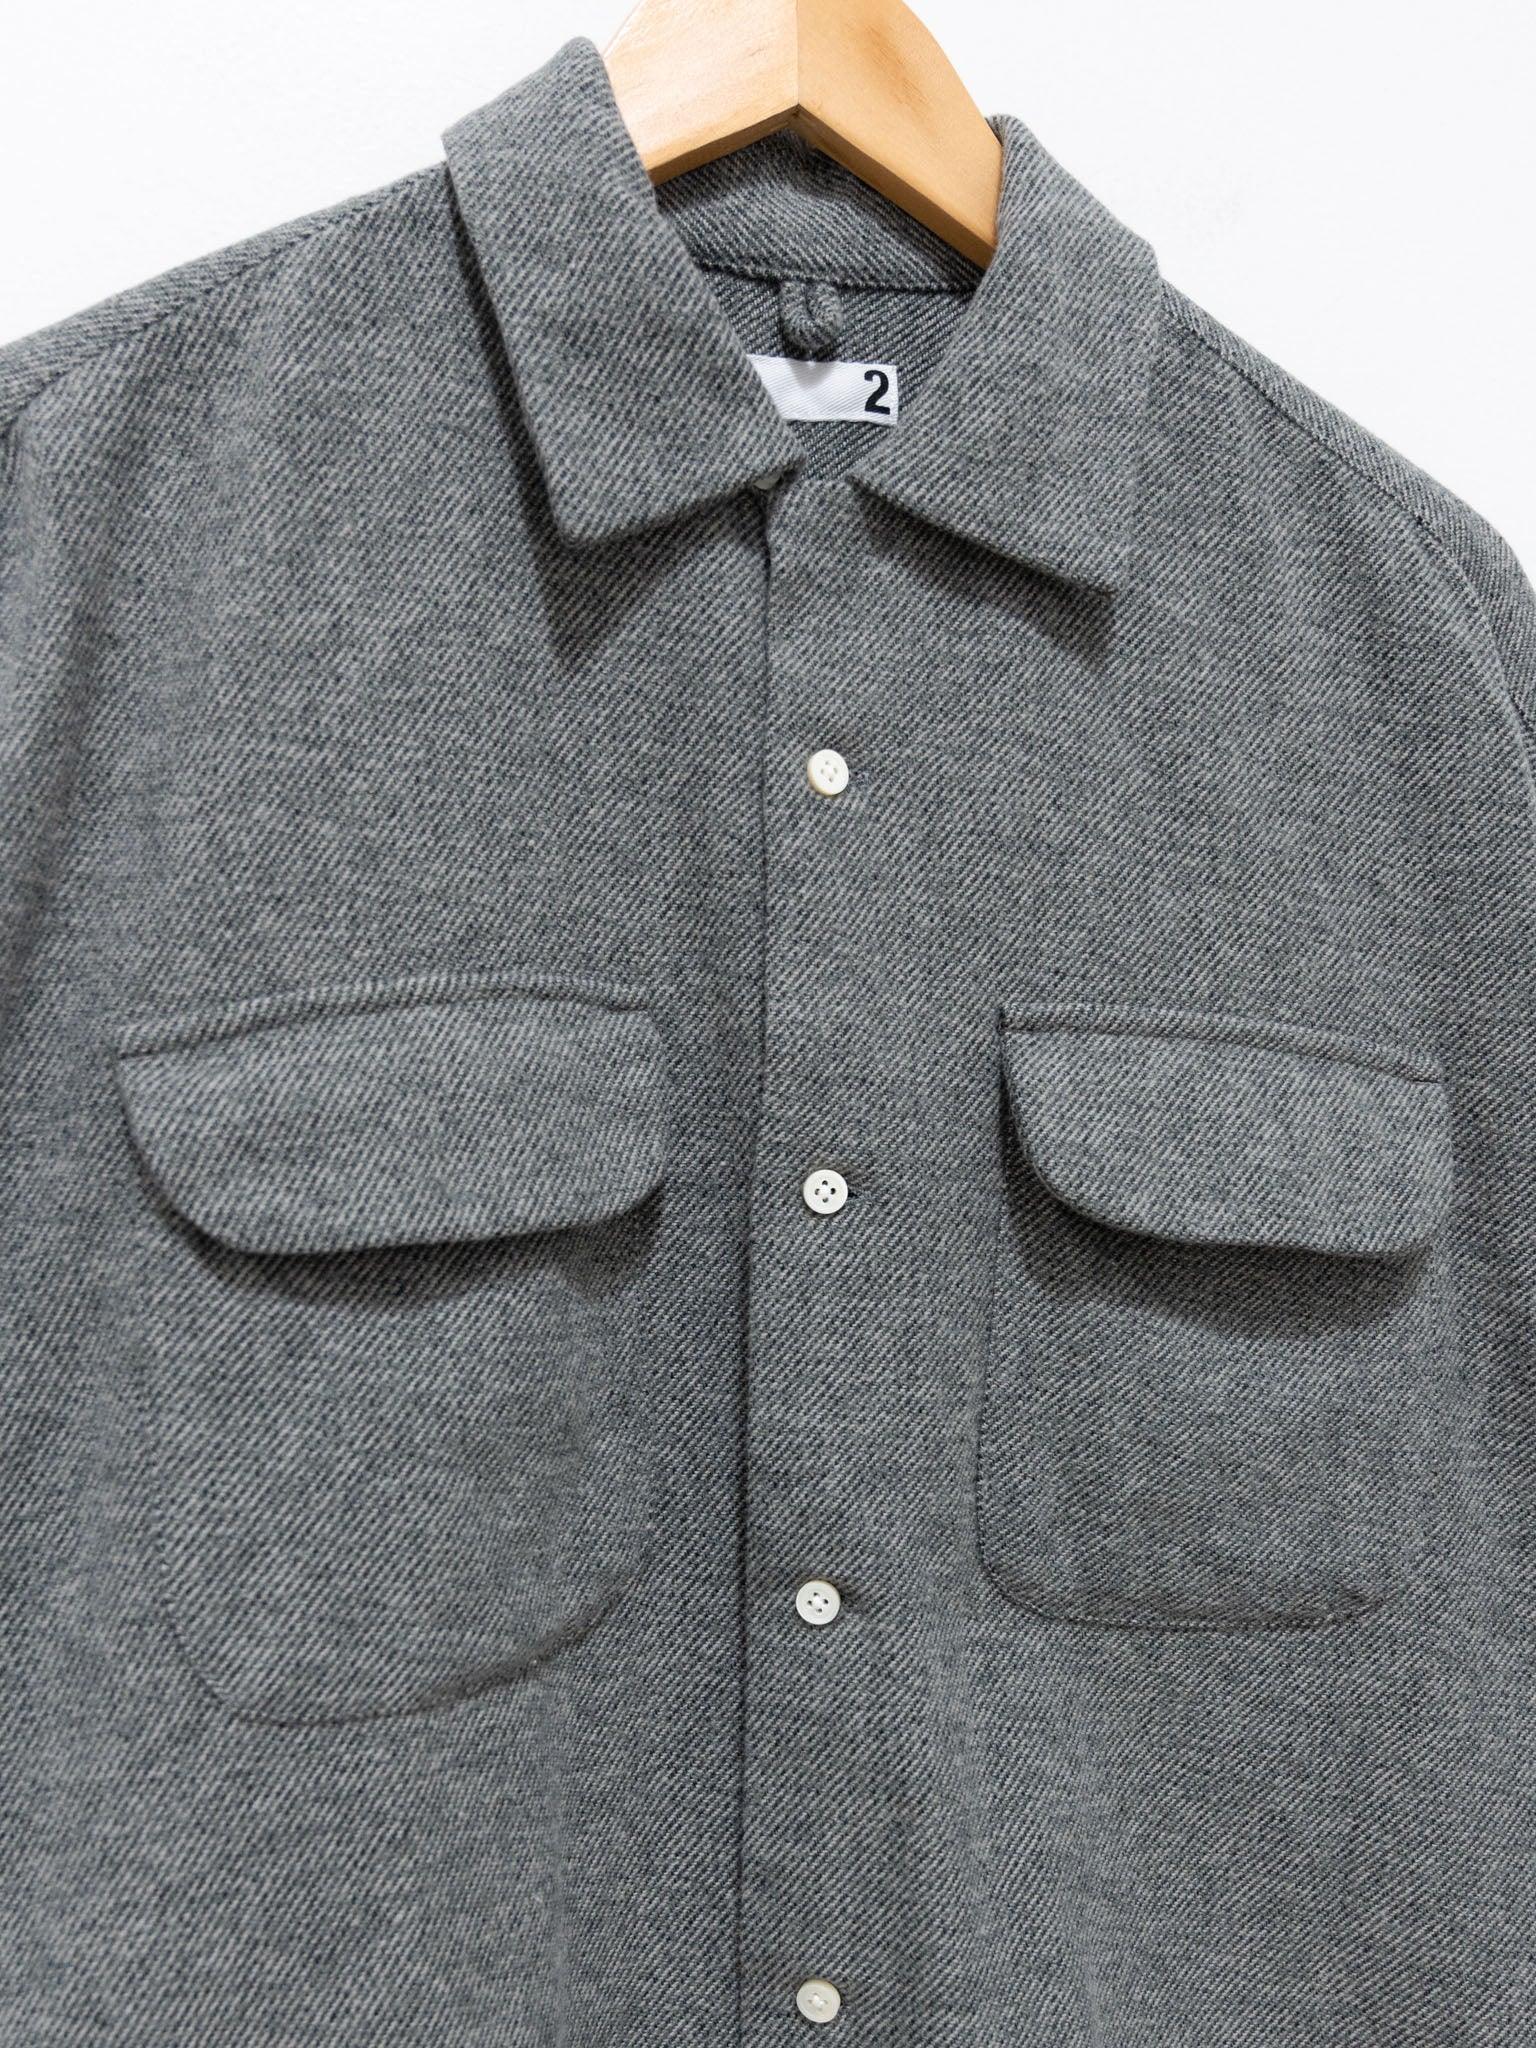 Namu Shop - ts(s) Mixed Flap Round Cotton Baggy Shirt Gray - Color Pocket